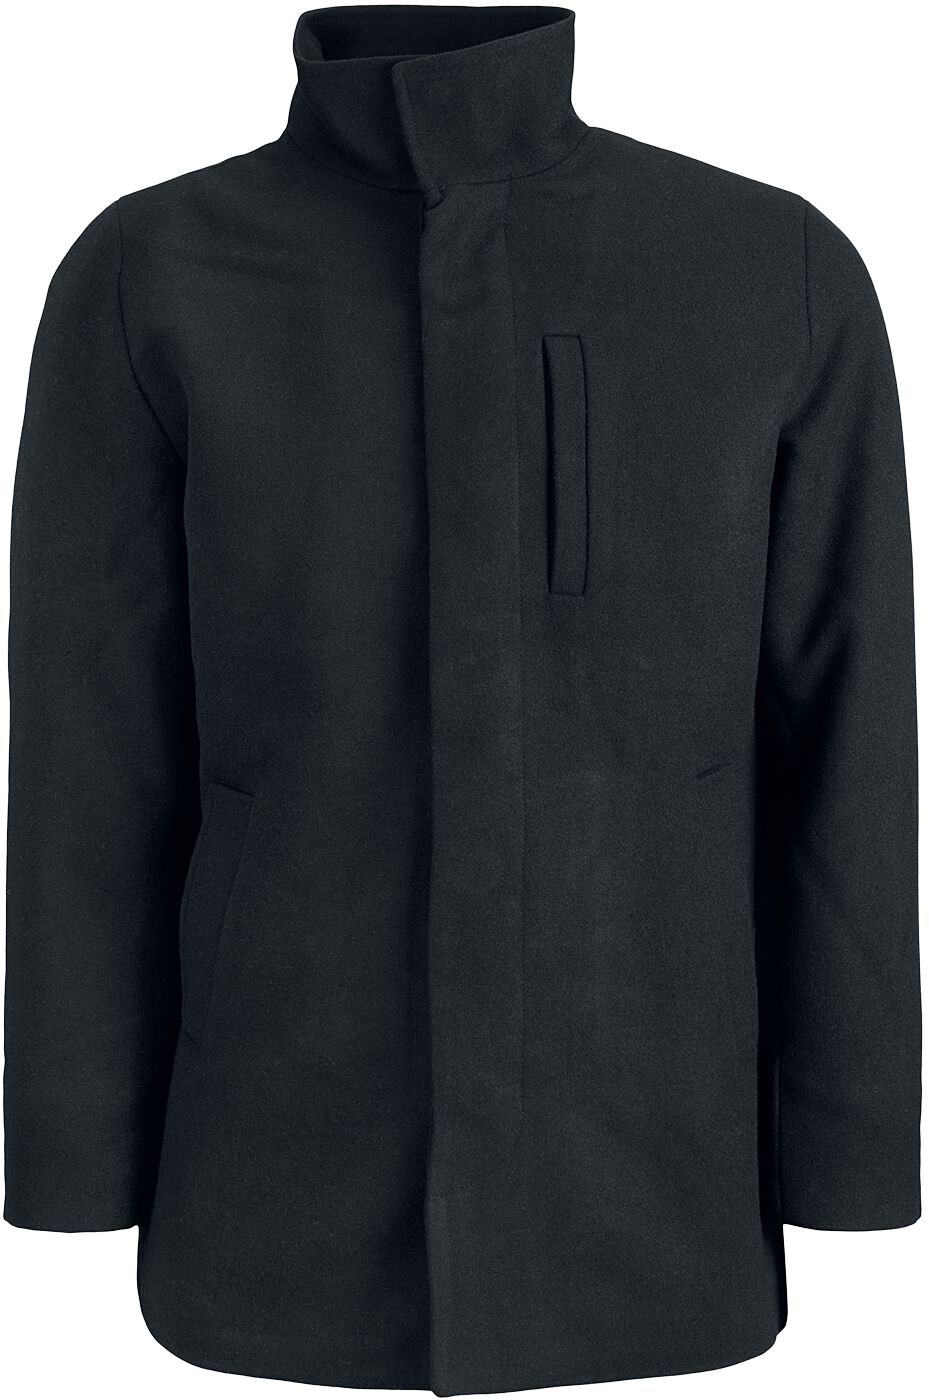 Image of Giacca invernale di Jack & Jones - Dunham wool jacket - S a XL - Uomo - nero